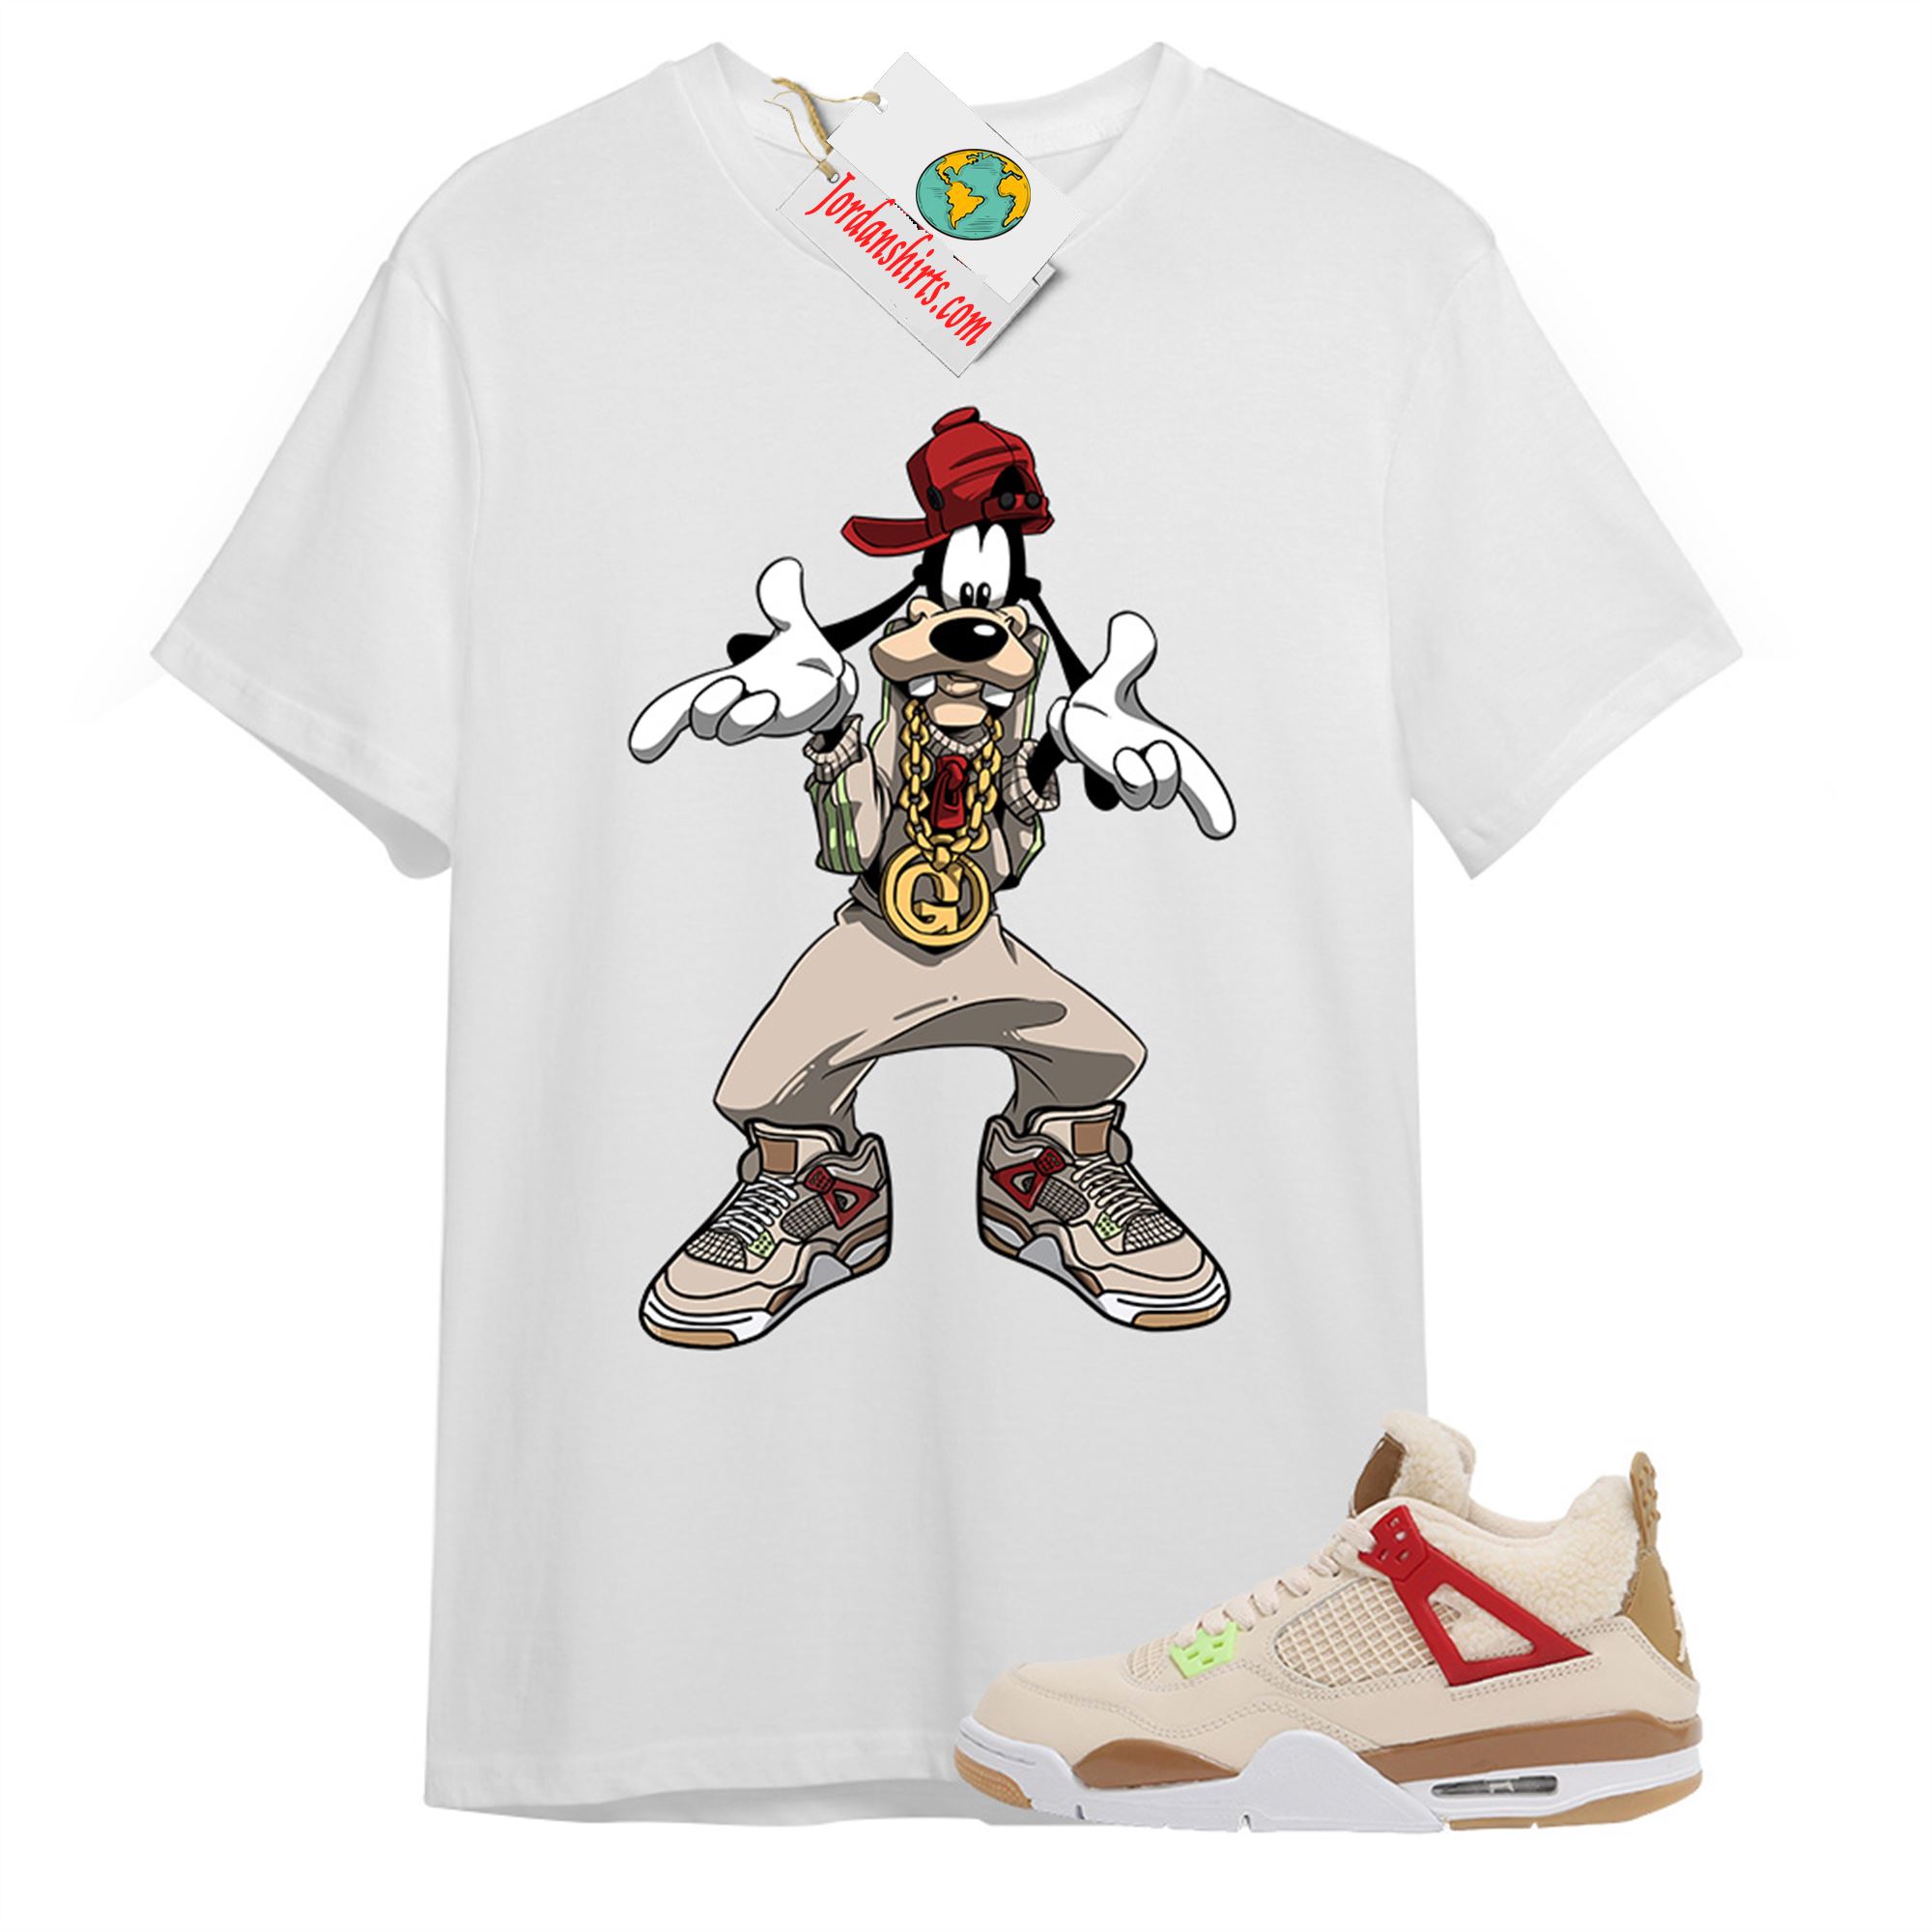 Jordan 4 Shirt, Goofy White T-shirt Air Jordan 4 Wild Thing 4s Size Up To 5xl